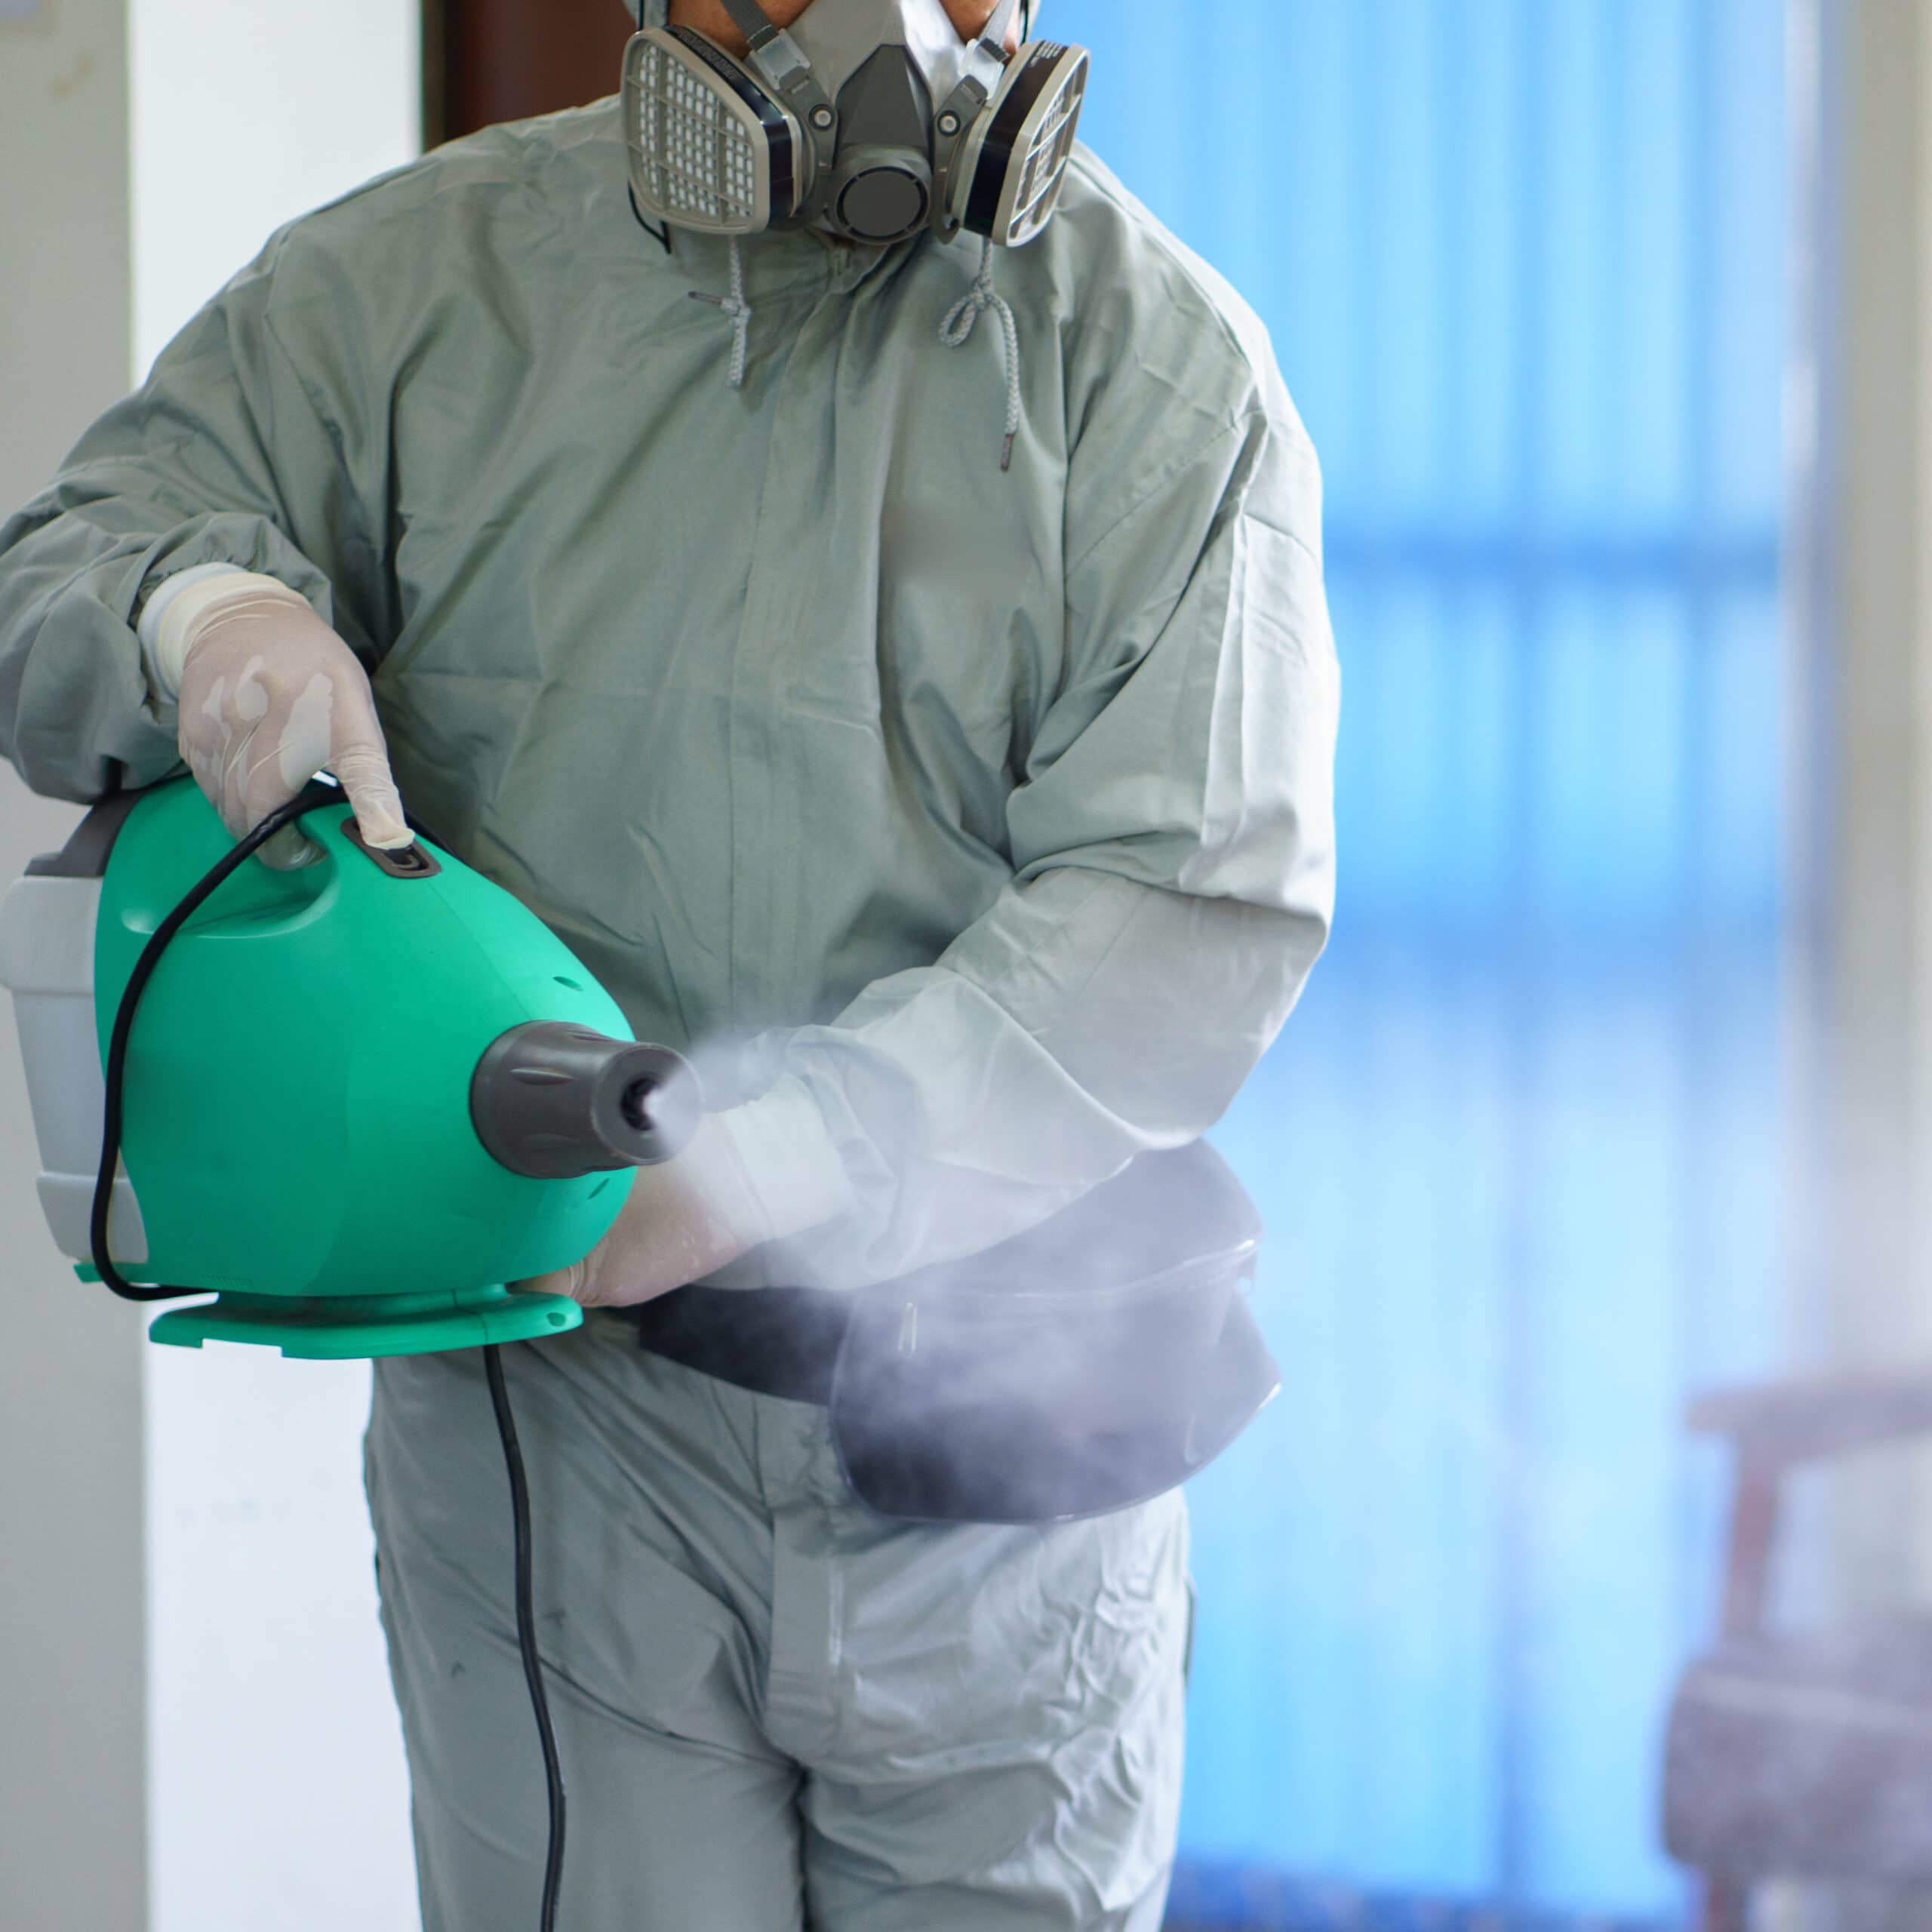 Pest controller in hazmat suit using insecticide